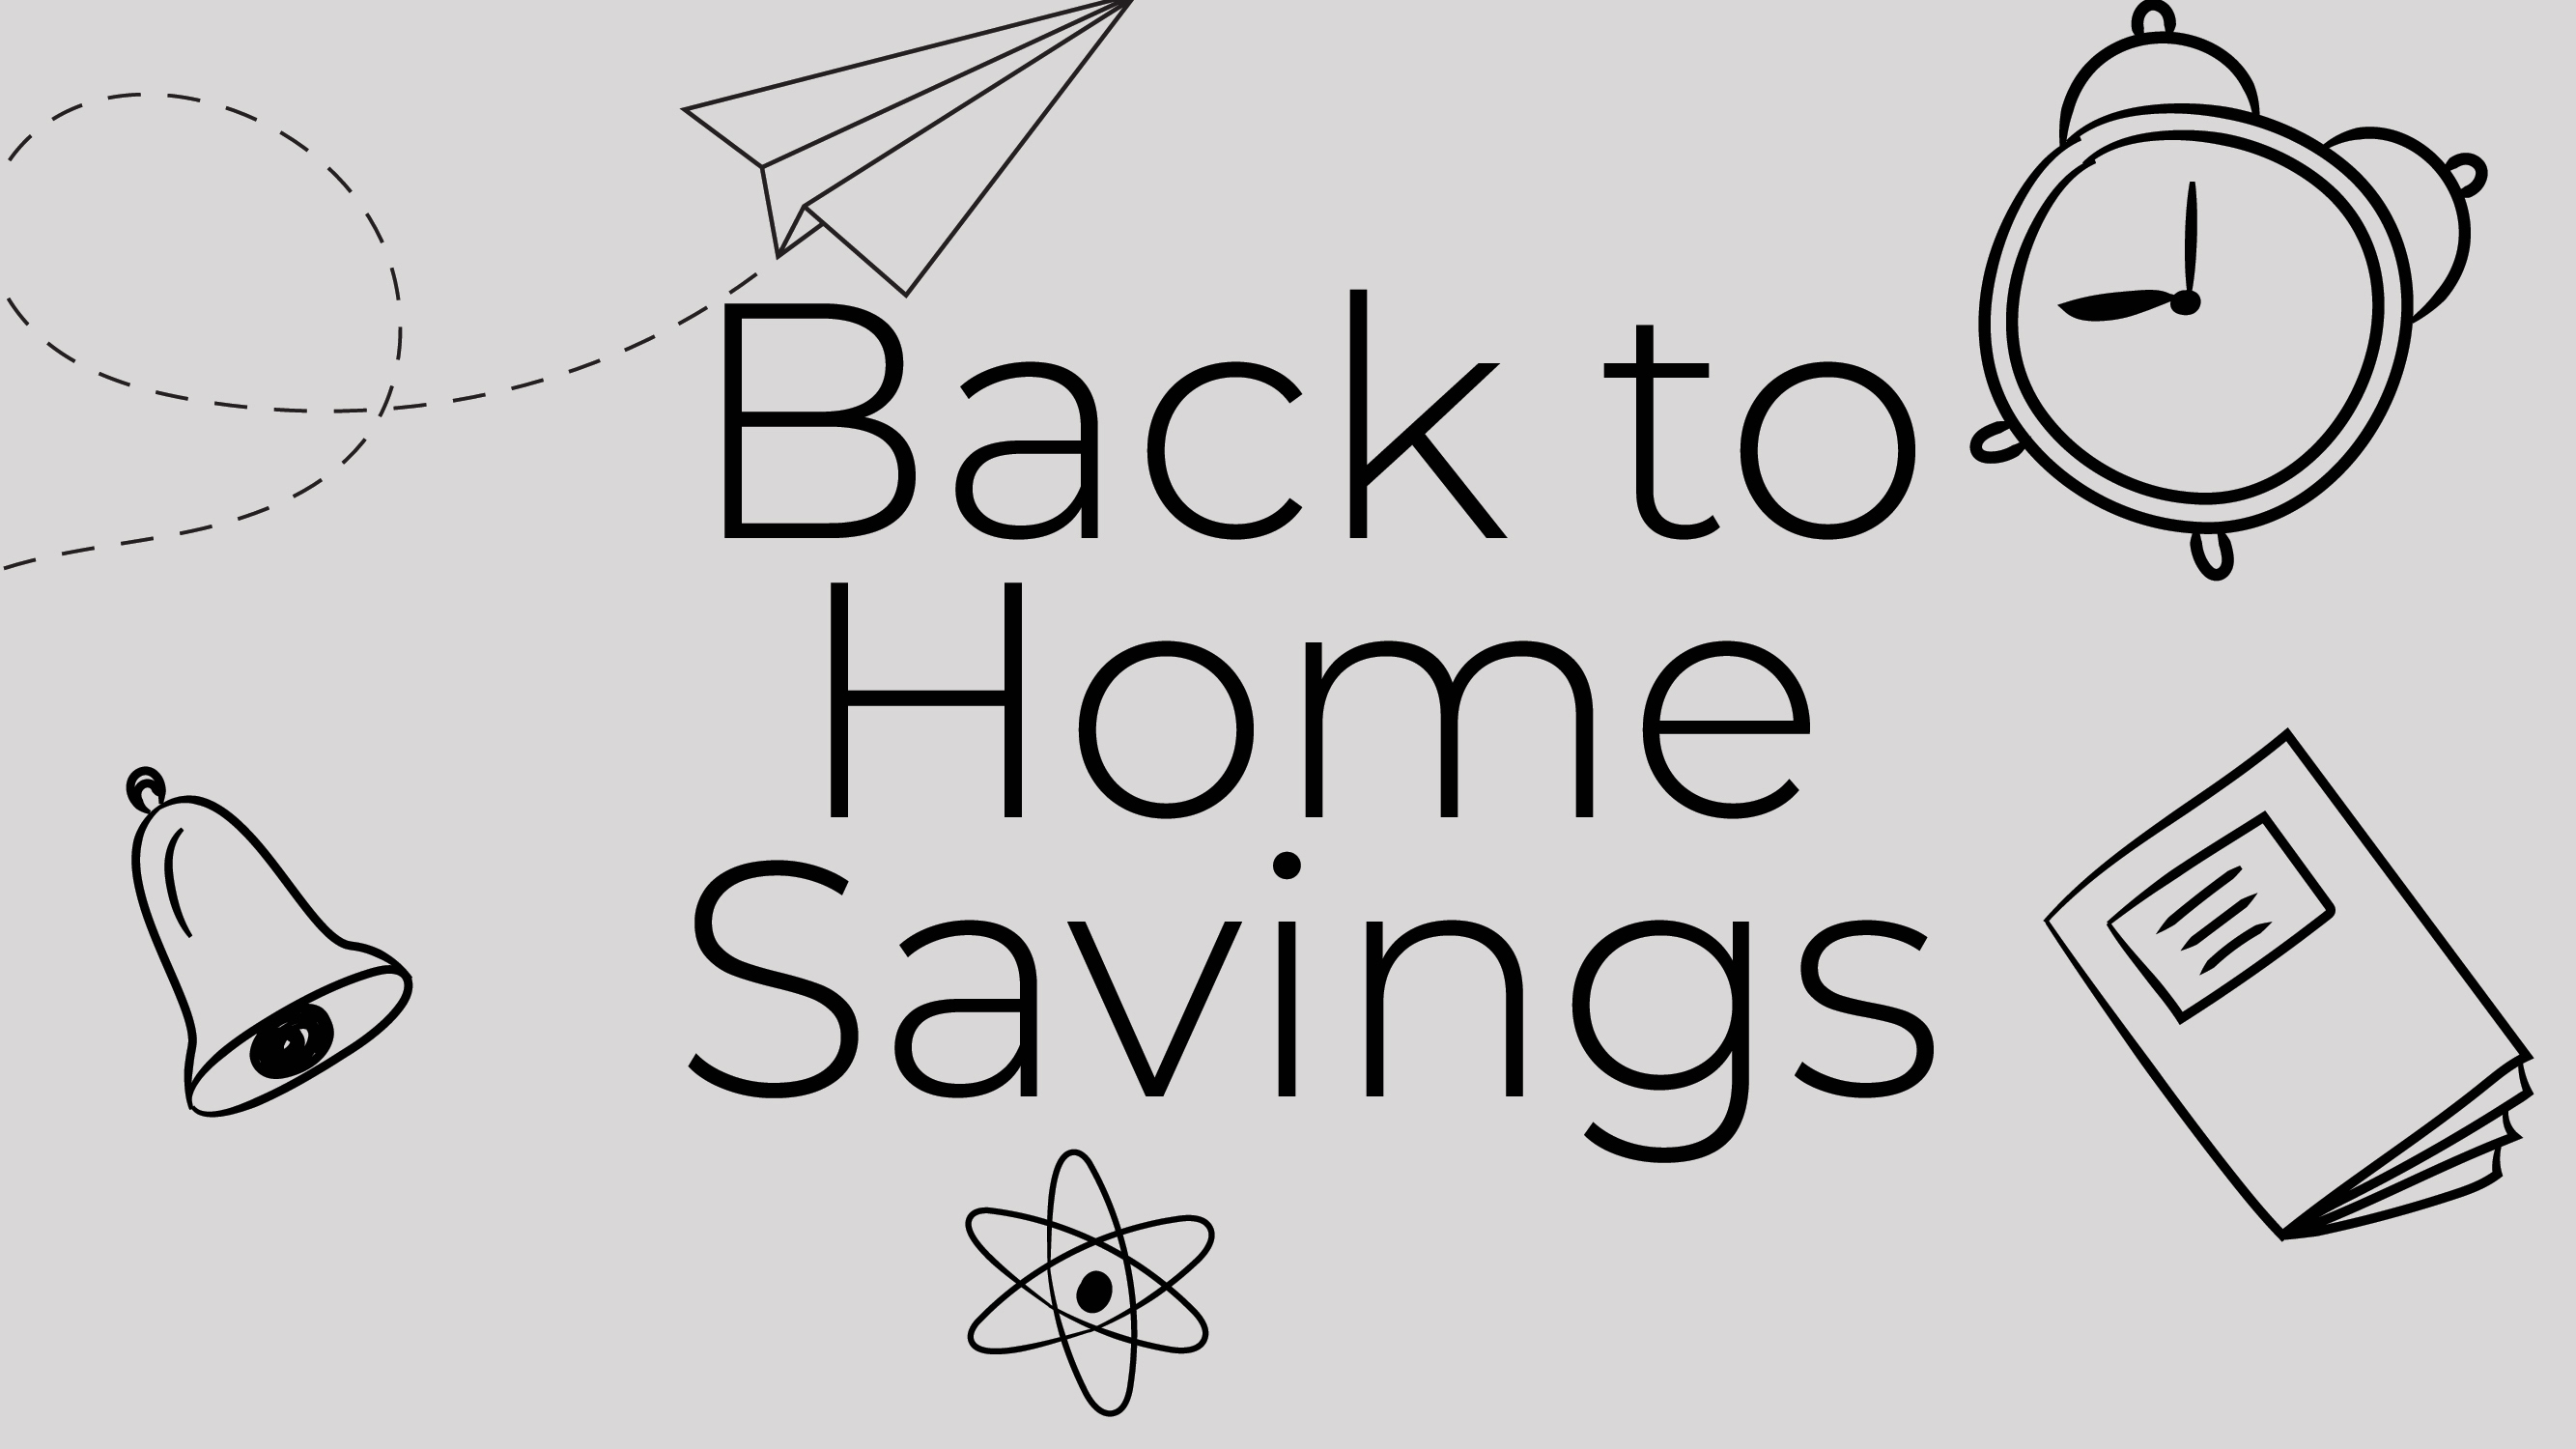 Back to Home Savings